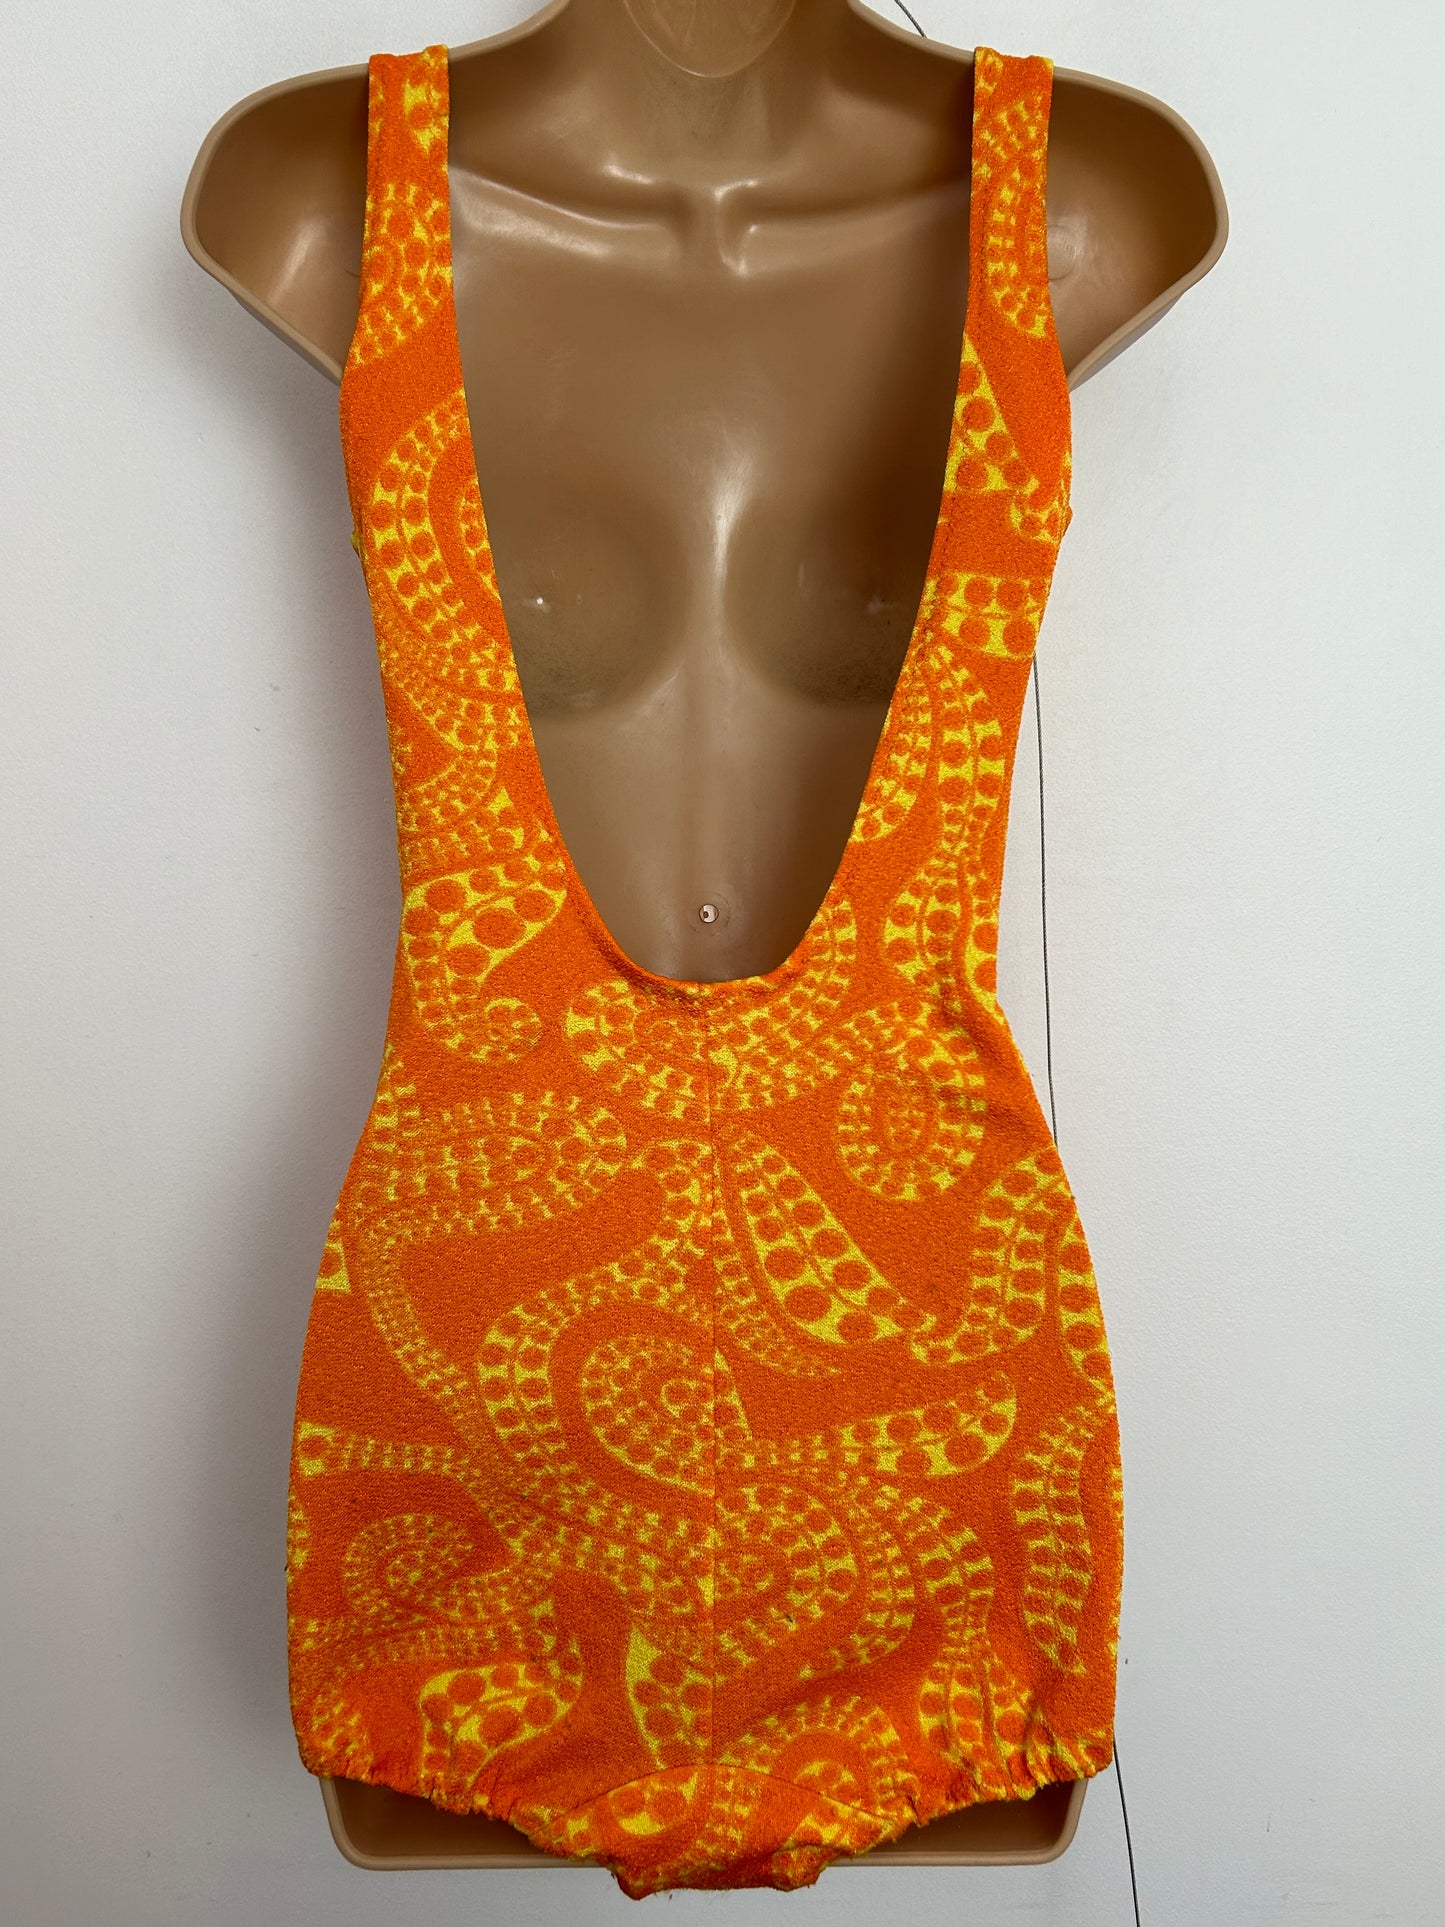 Vintage 1960s ARIELLA Approx UK Size 14-16 Orange & Yellow Paisley Print Skirted Swimsuit Bathing Costume